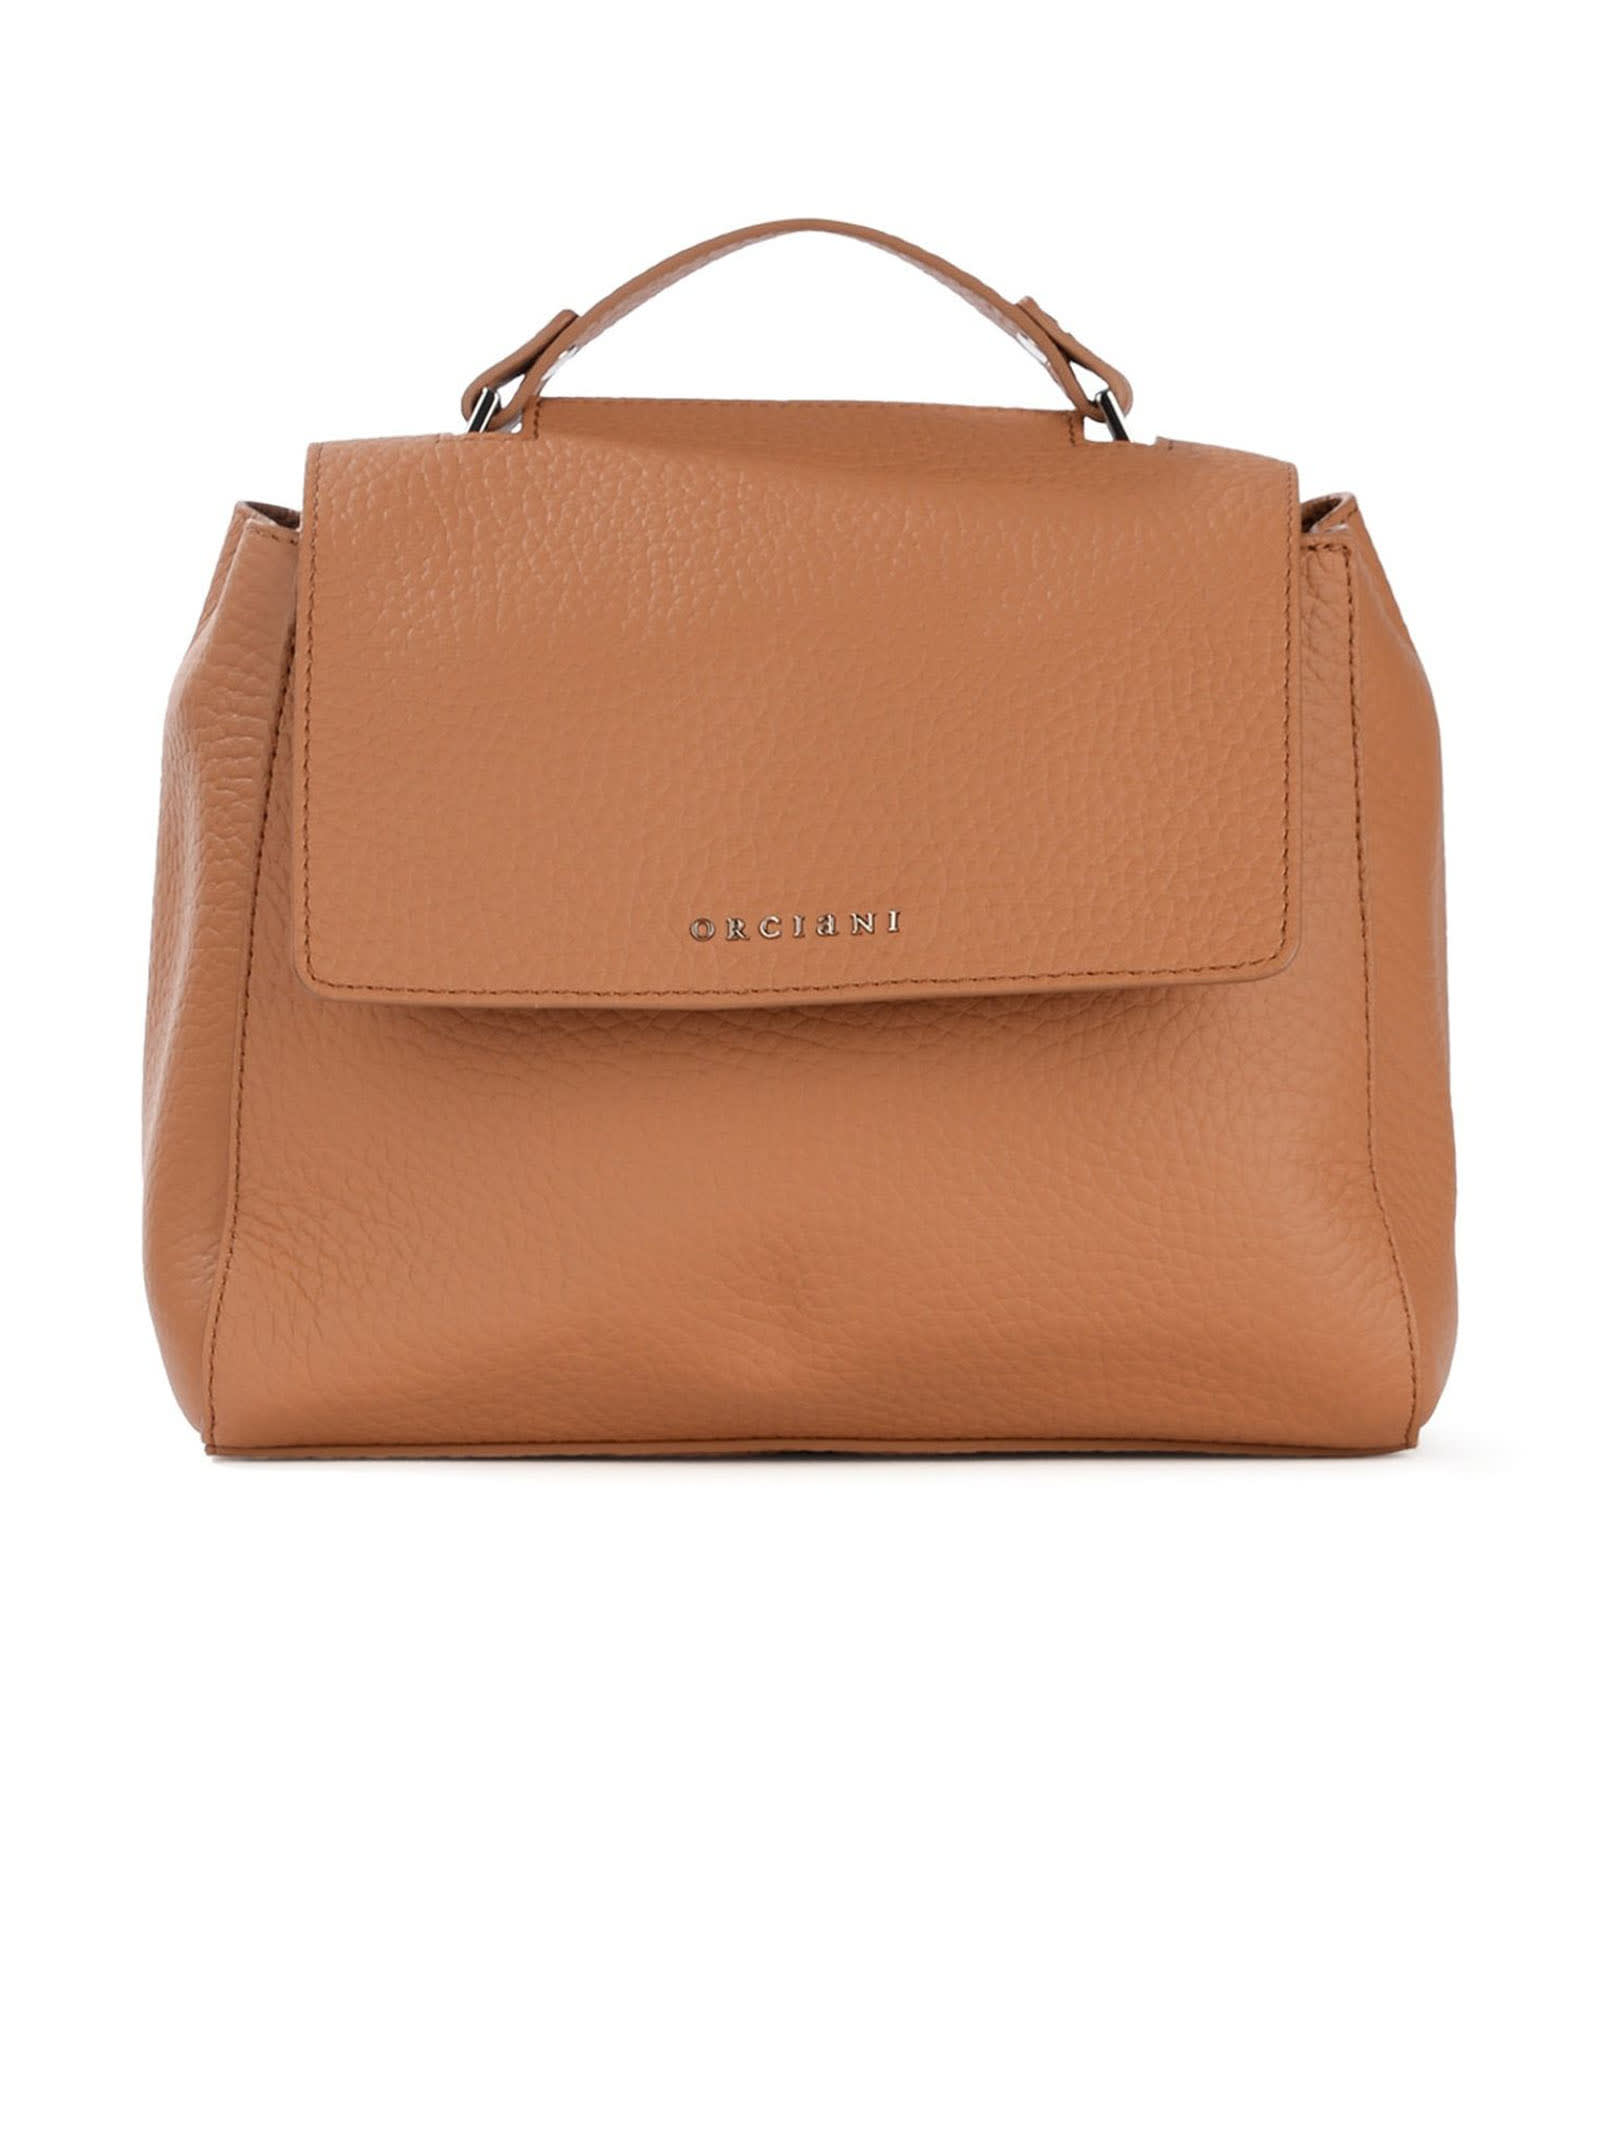 Sveva Soft Small Leather Handbag